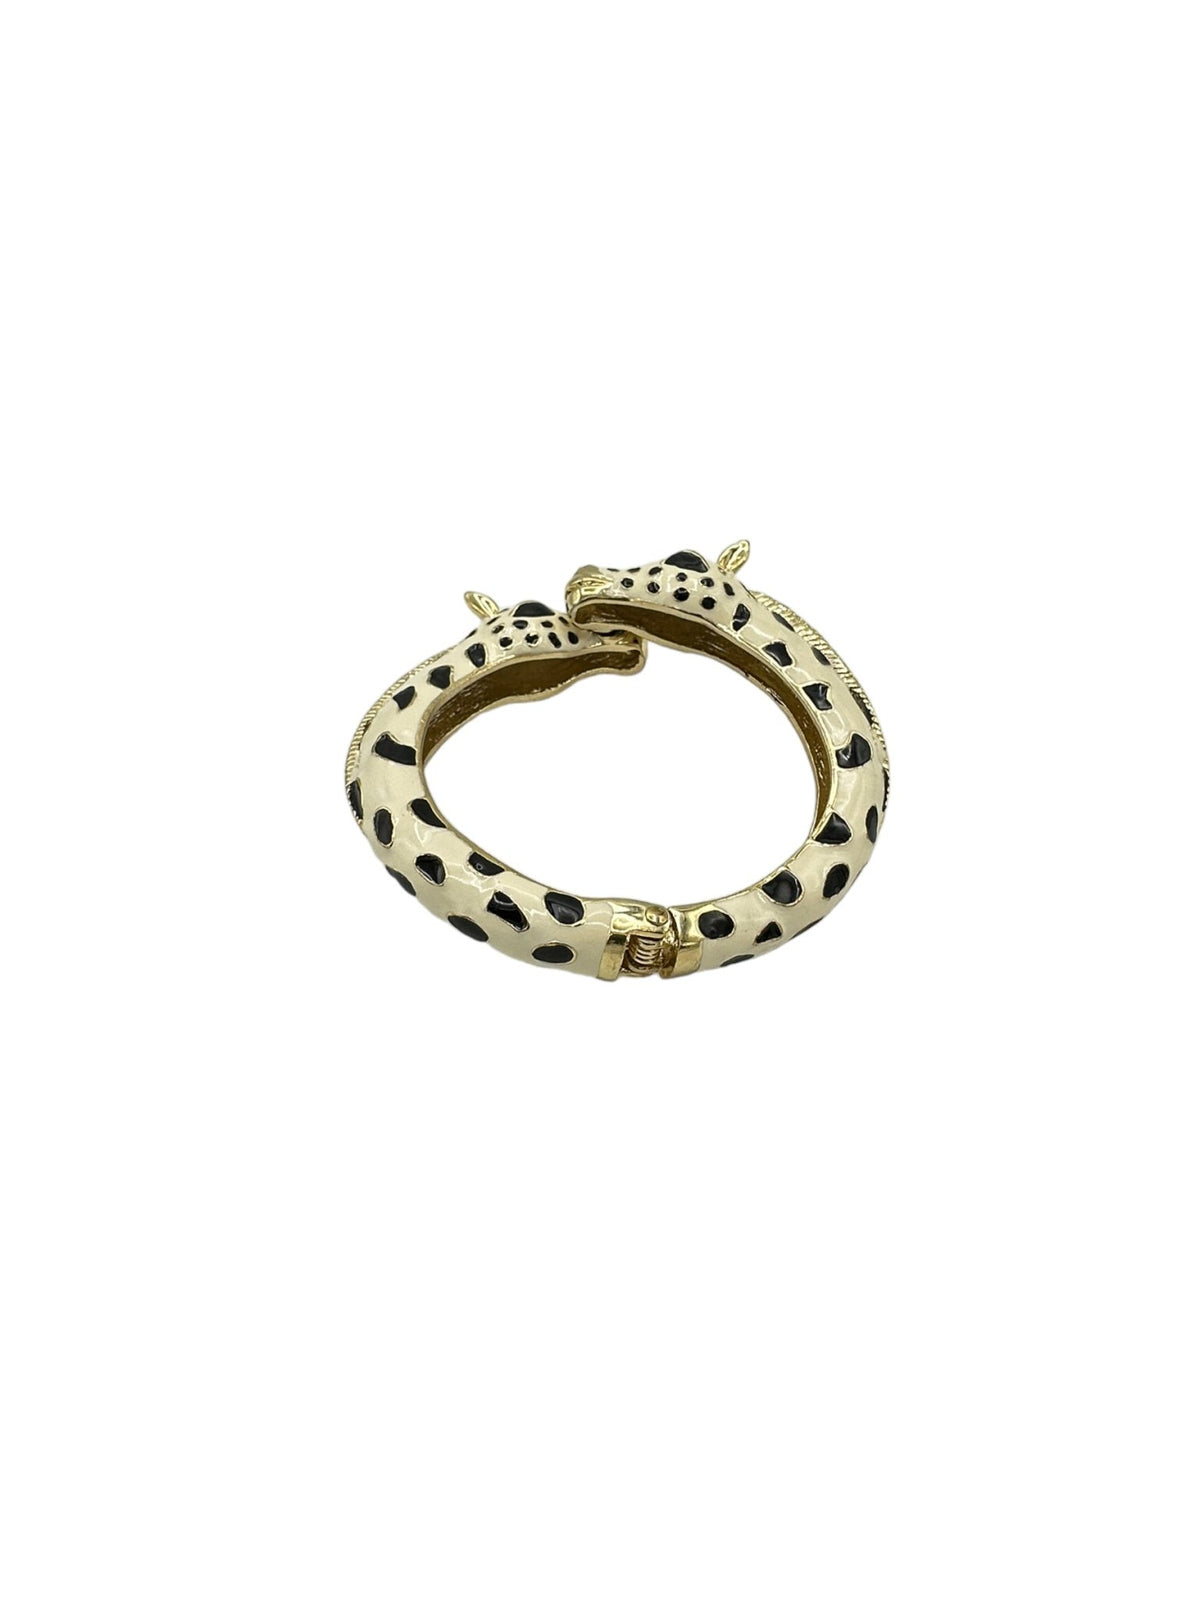 Fornash Black & White Giraffe Hinged Bangle Bracelet - 24 Wishes Vintage Jewelry